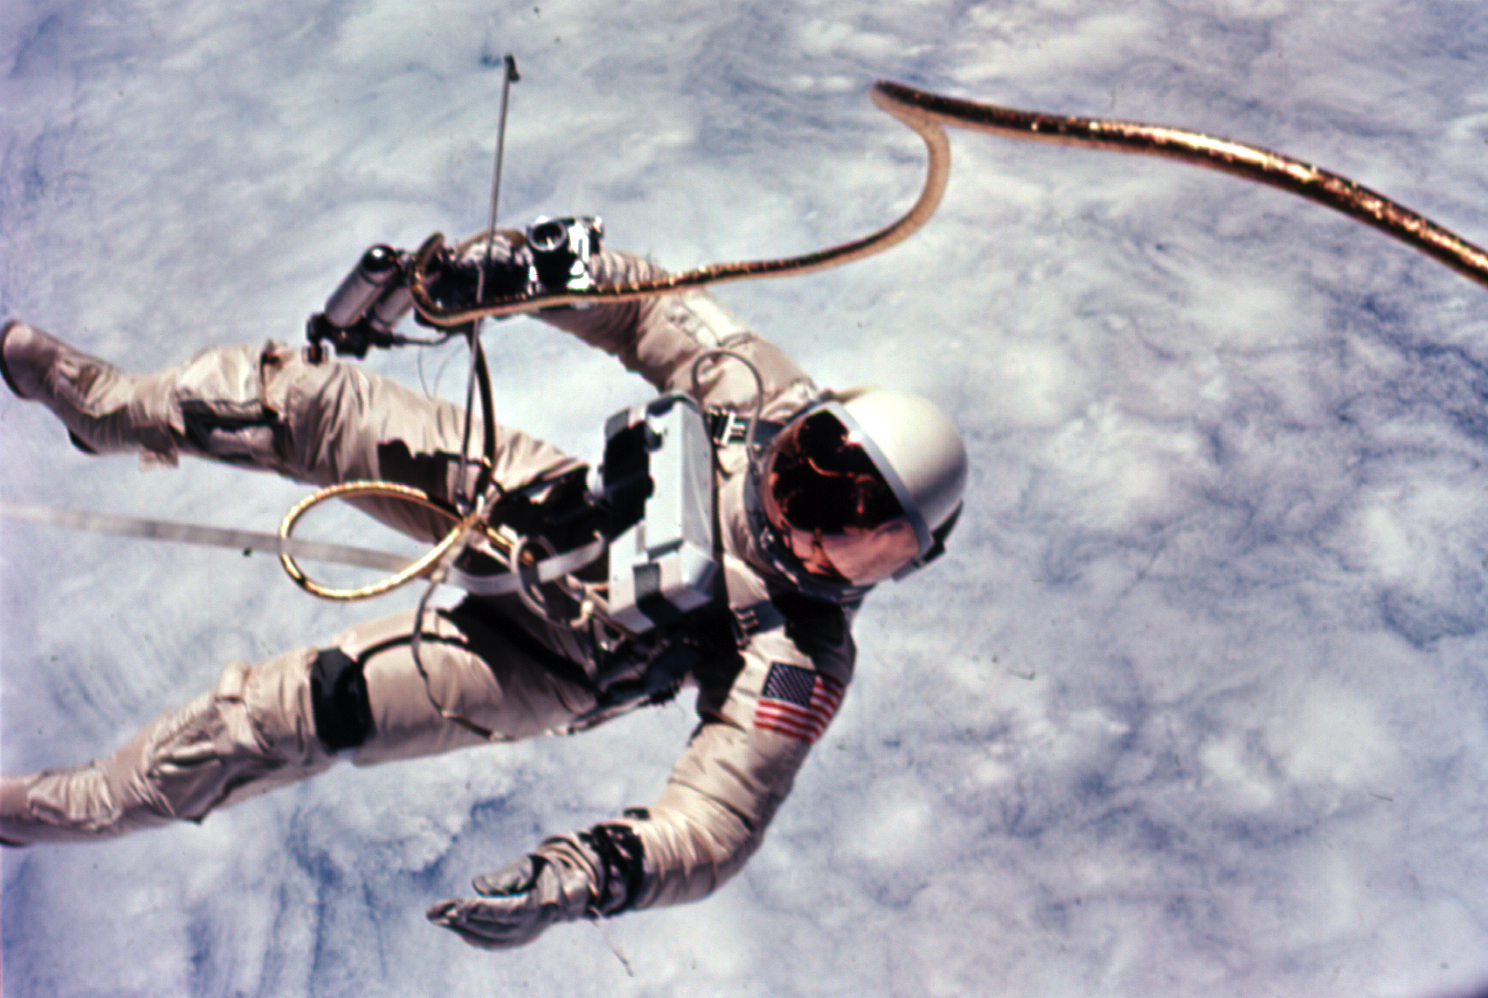 Astronaut_Edward_White_first_American_spacewalk_Gemini_4